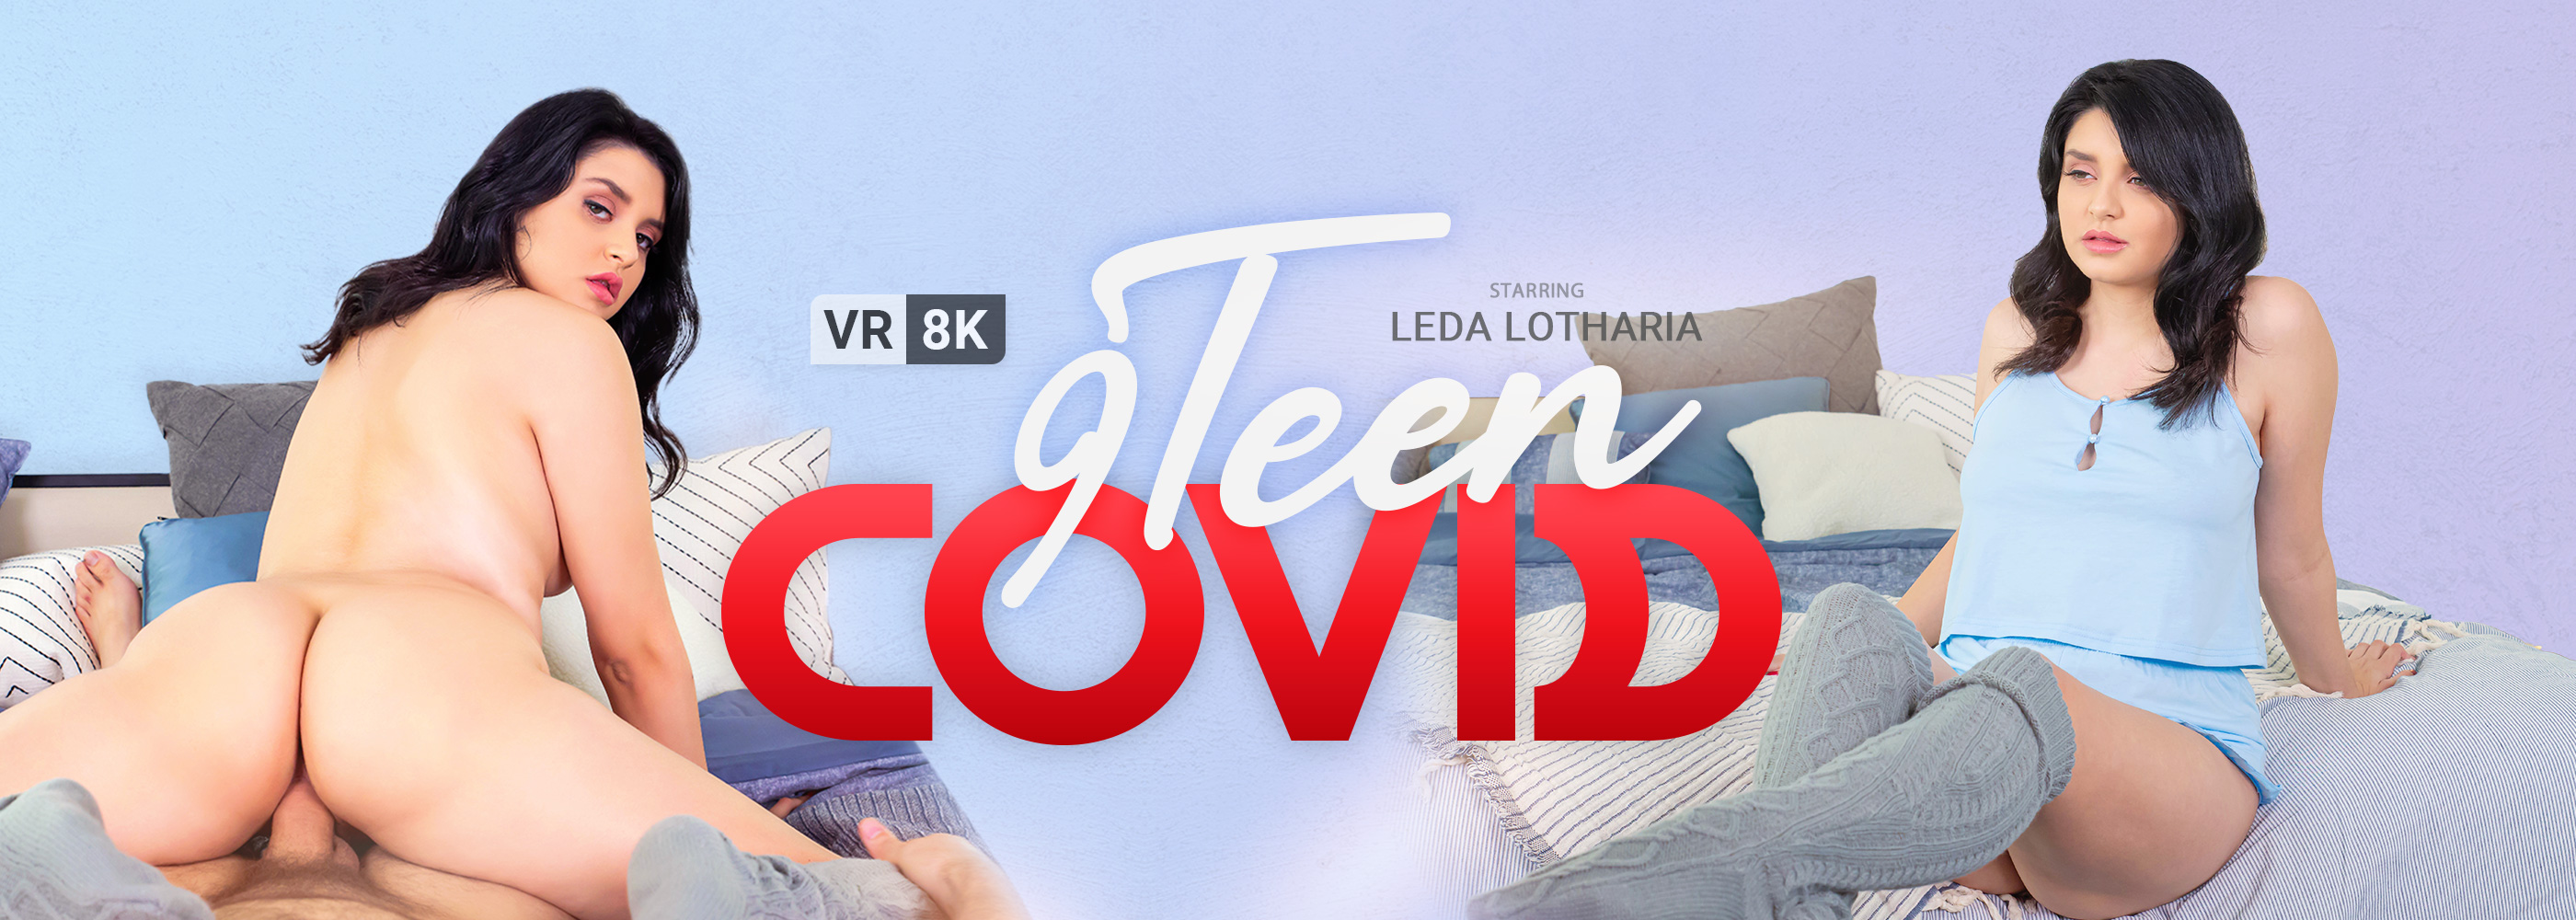 COVID-9TEEN - VR Porn Video, Starring: Leda Lotharia